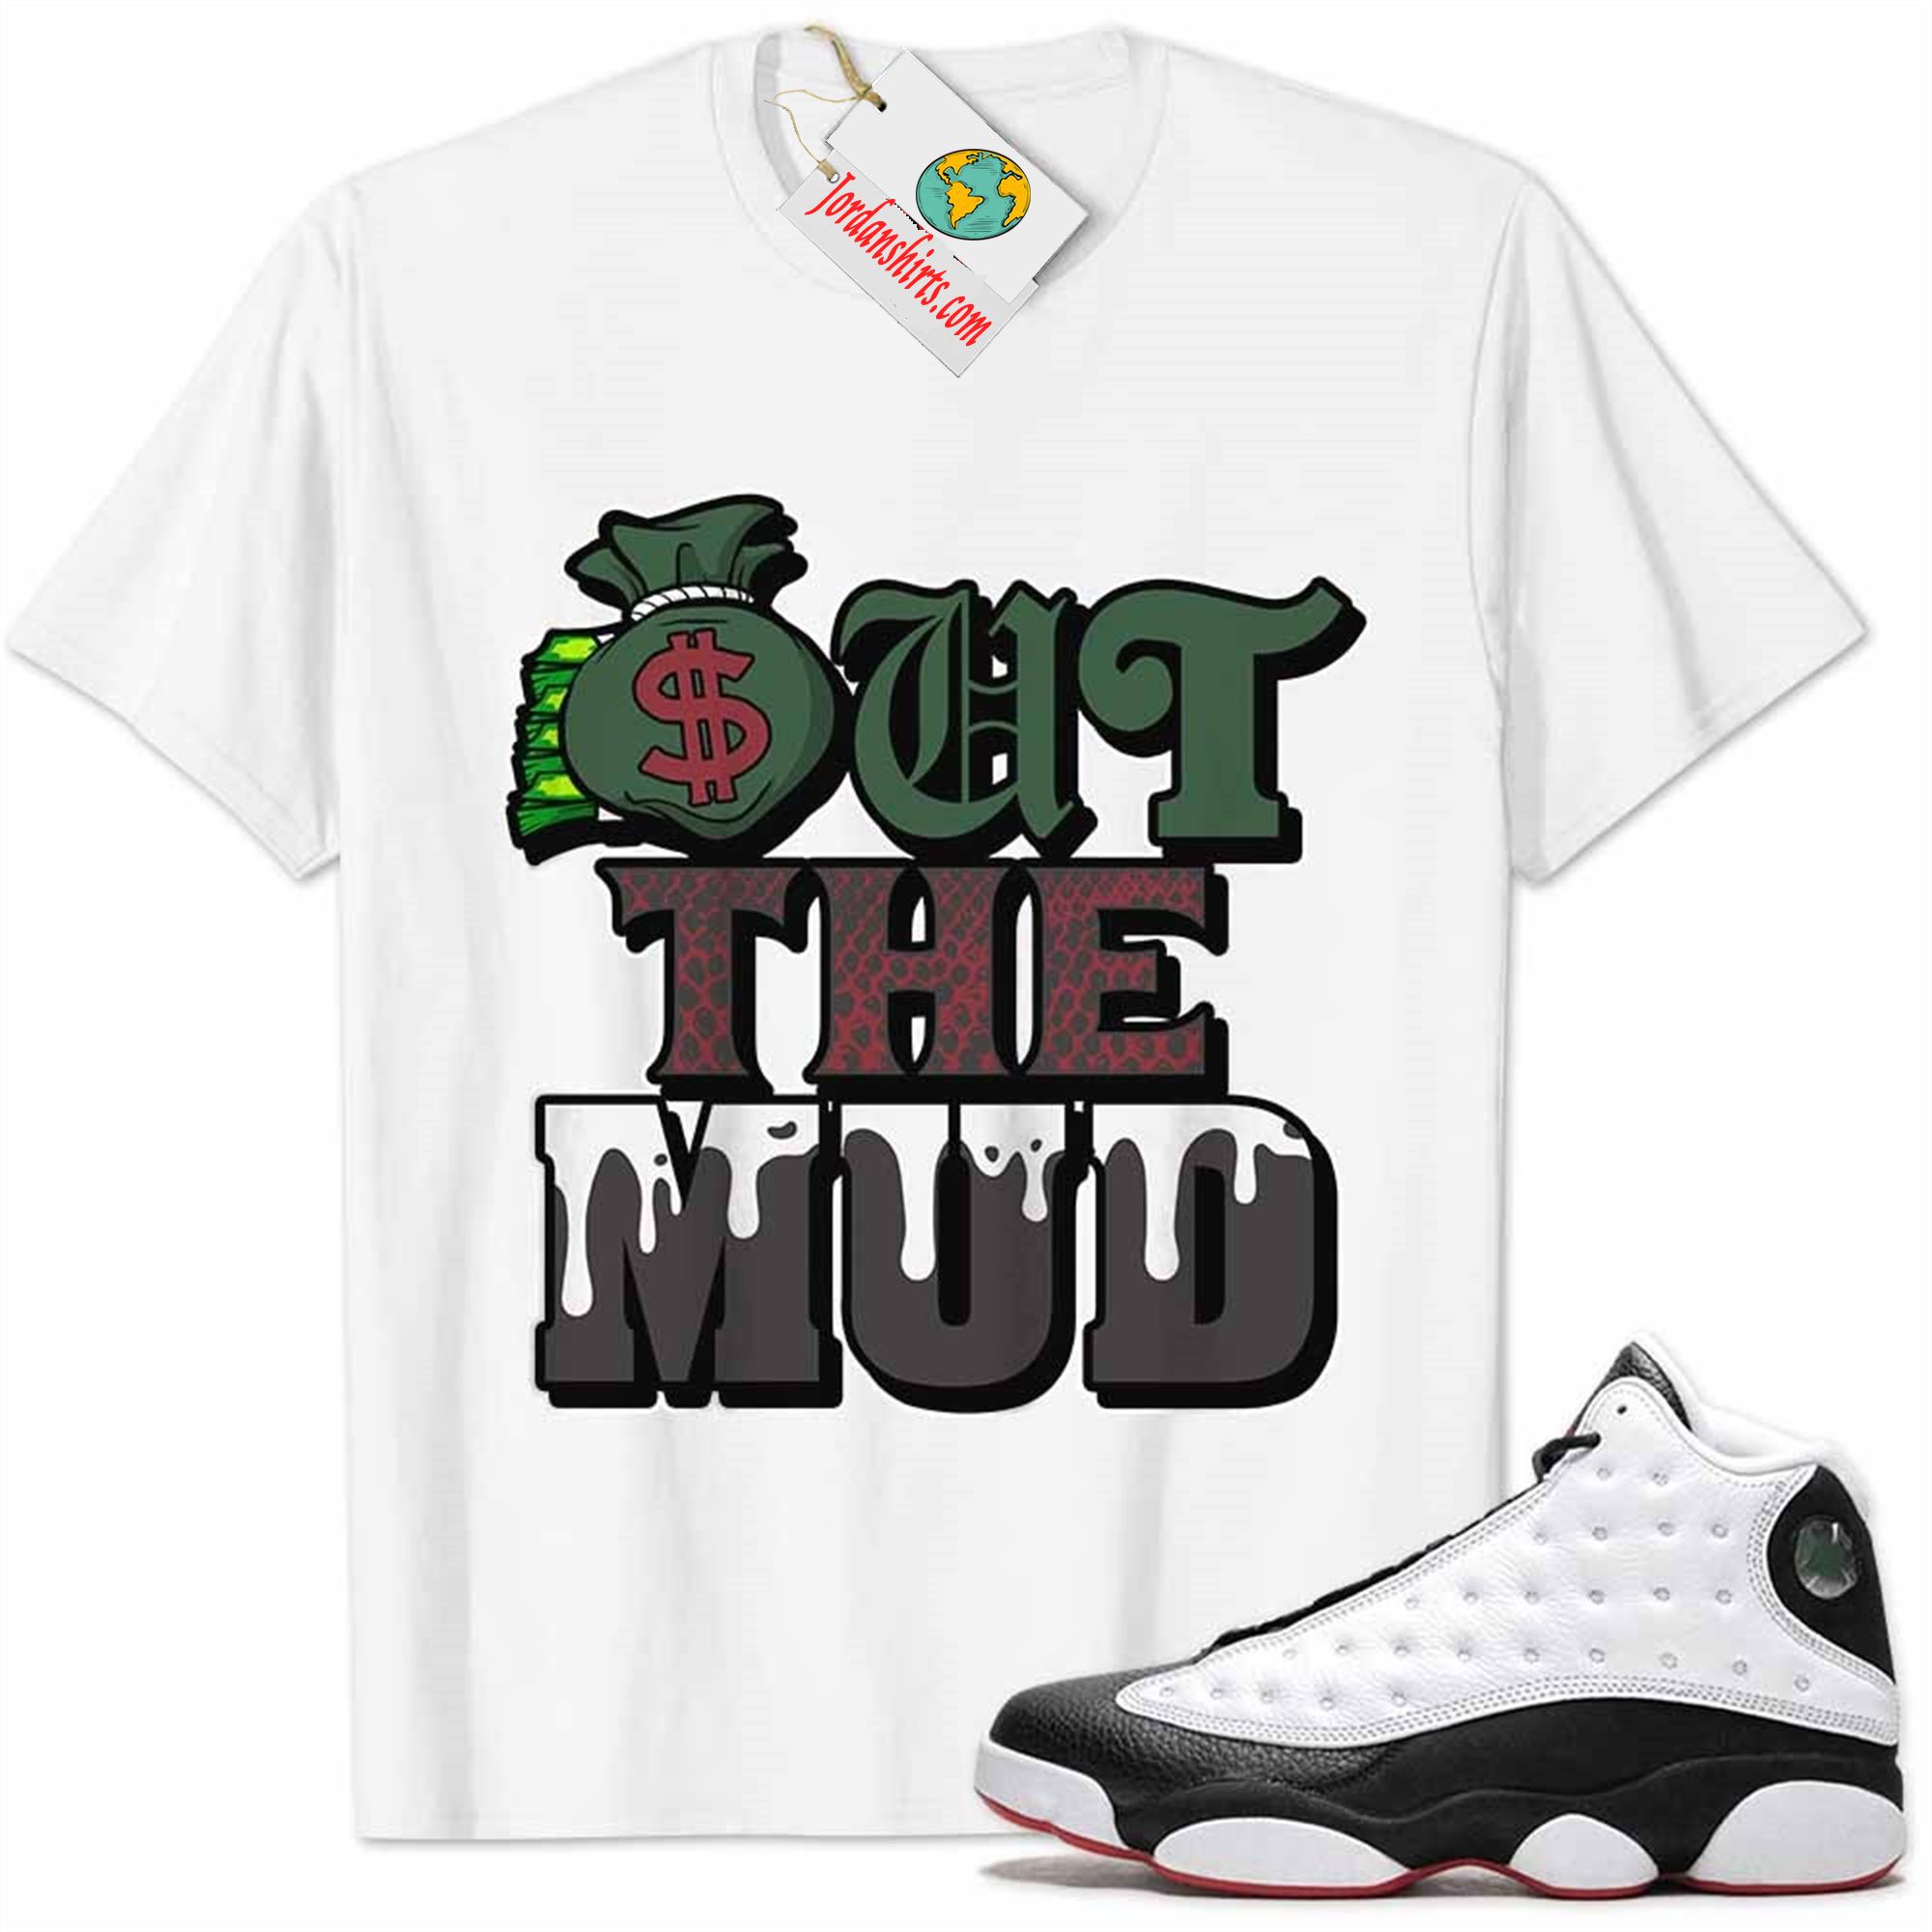 Jordan 13 Shirt, Jordan 13 He Got Game Shirt Out The Mud Money Bag White Size Up To 5xl